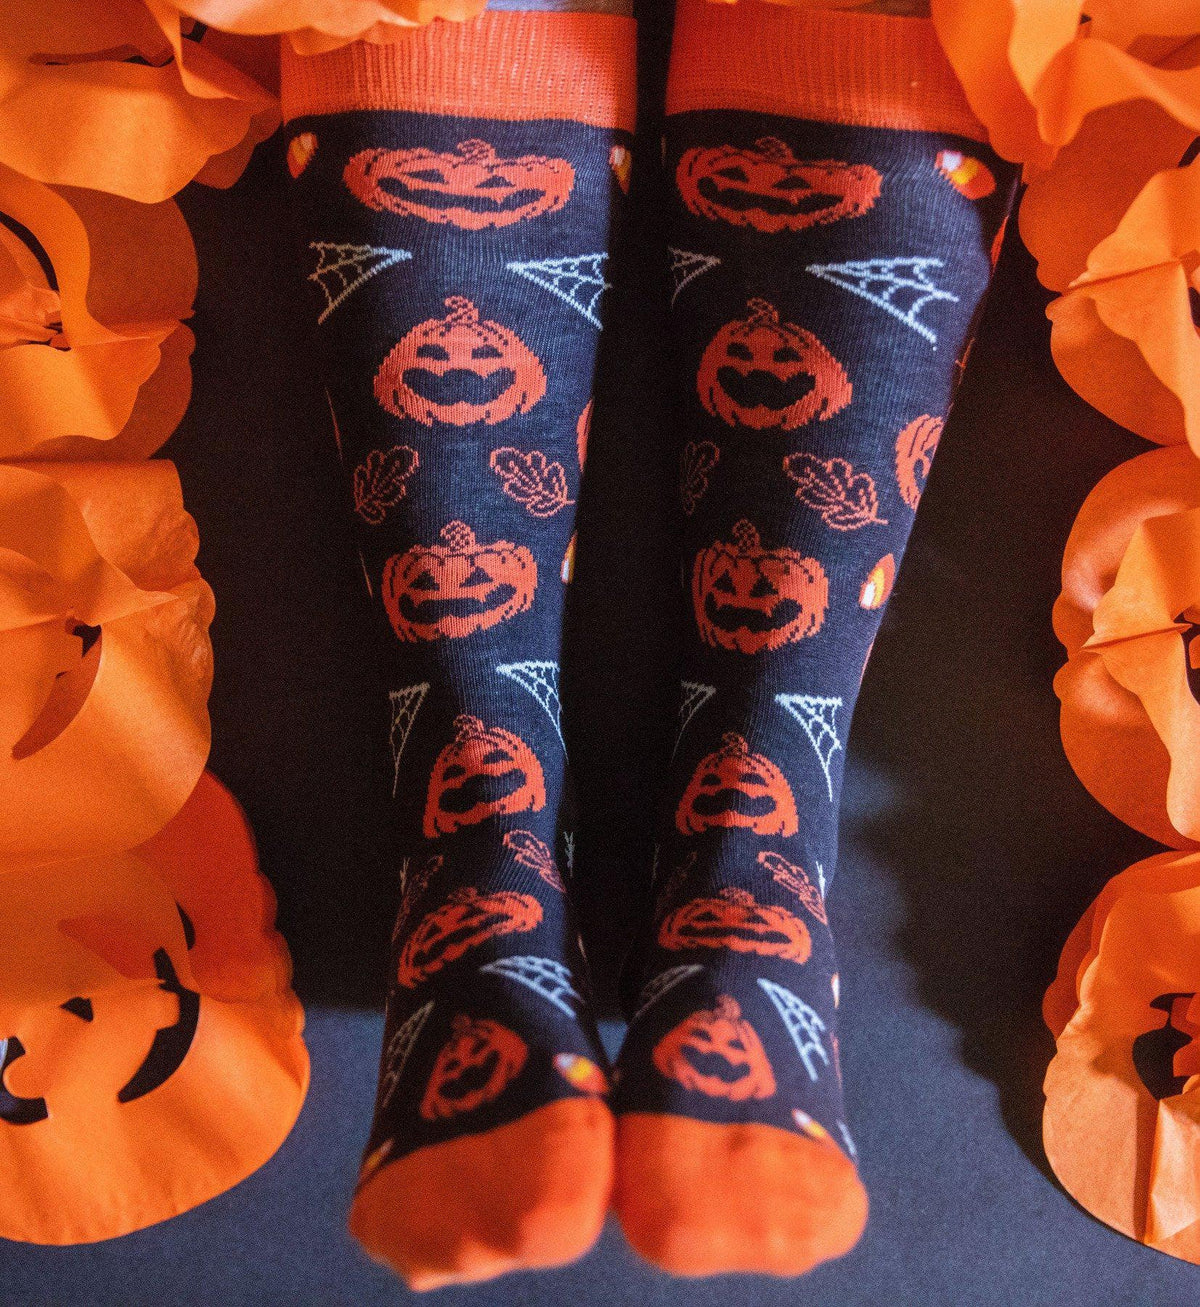 Youth Halloween Socks Funny Zombie Pumpkin Scary Footwear  -  Crazy Dog T-Shirts